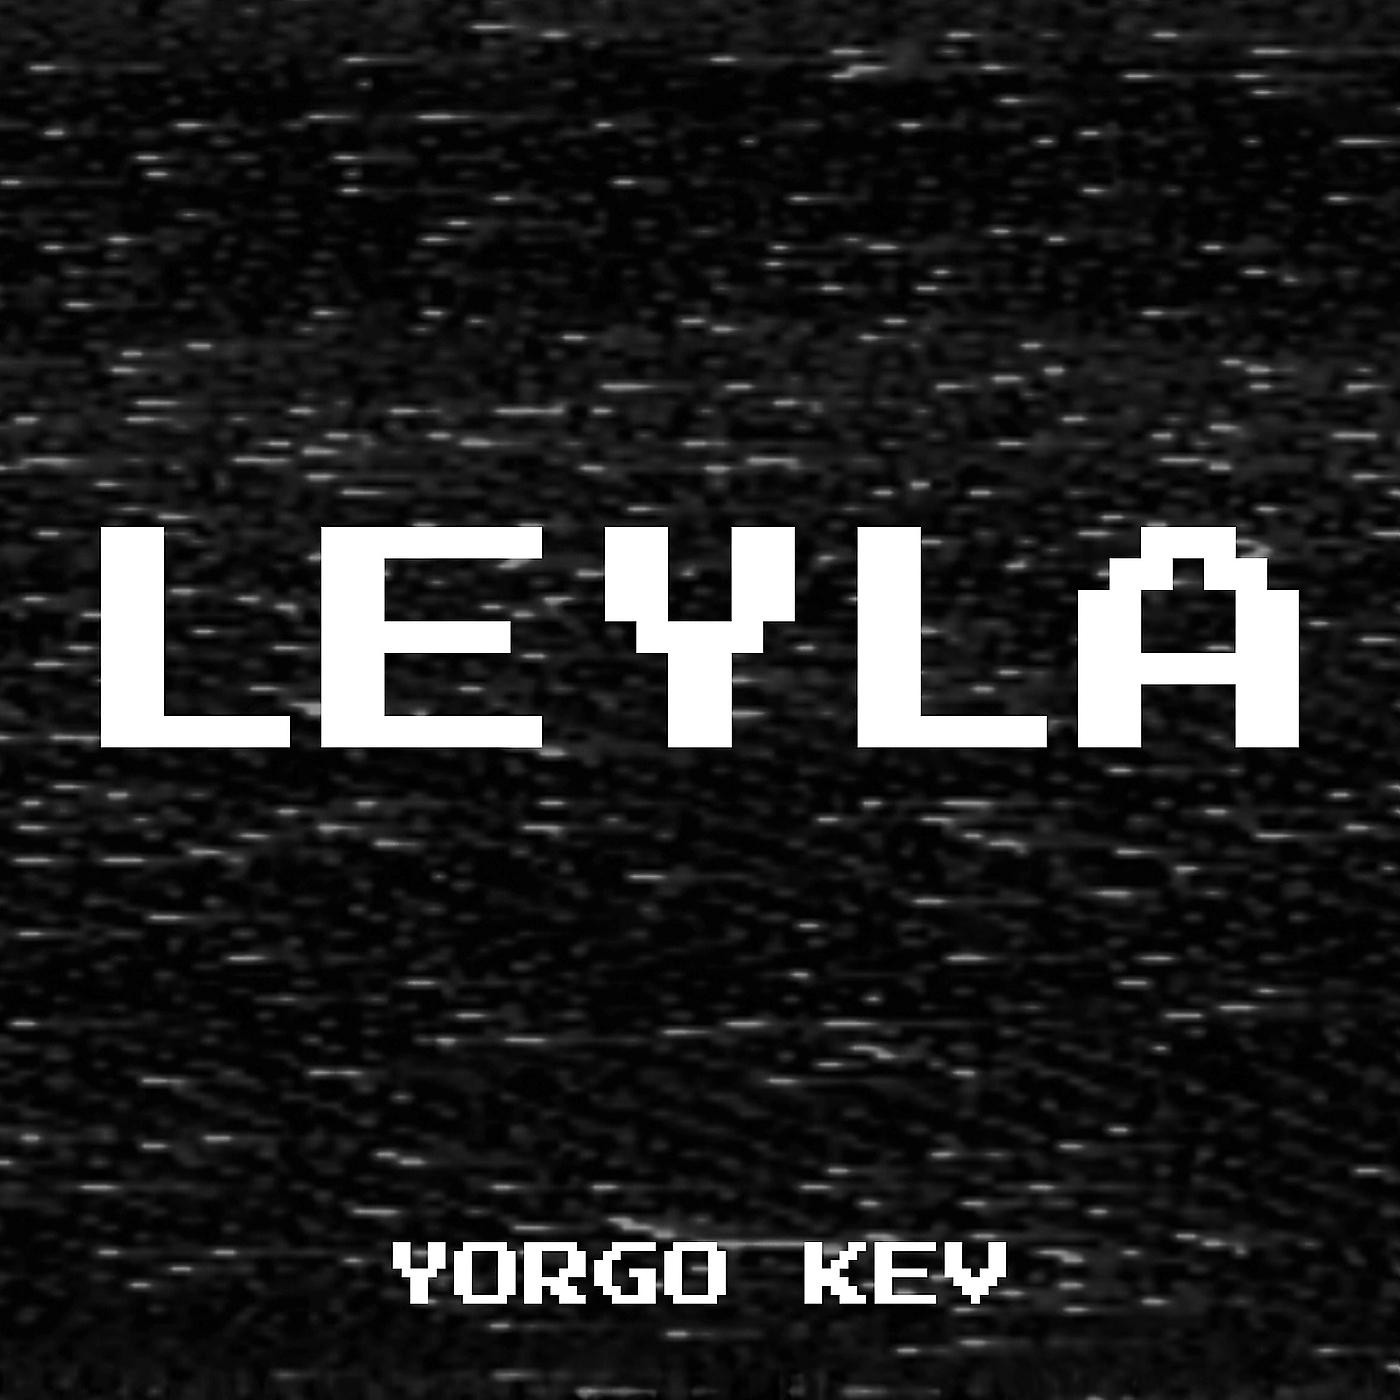 Постер альбома Leyla